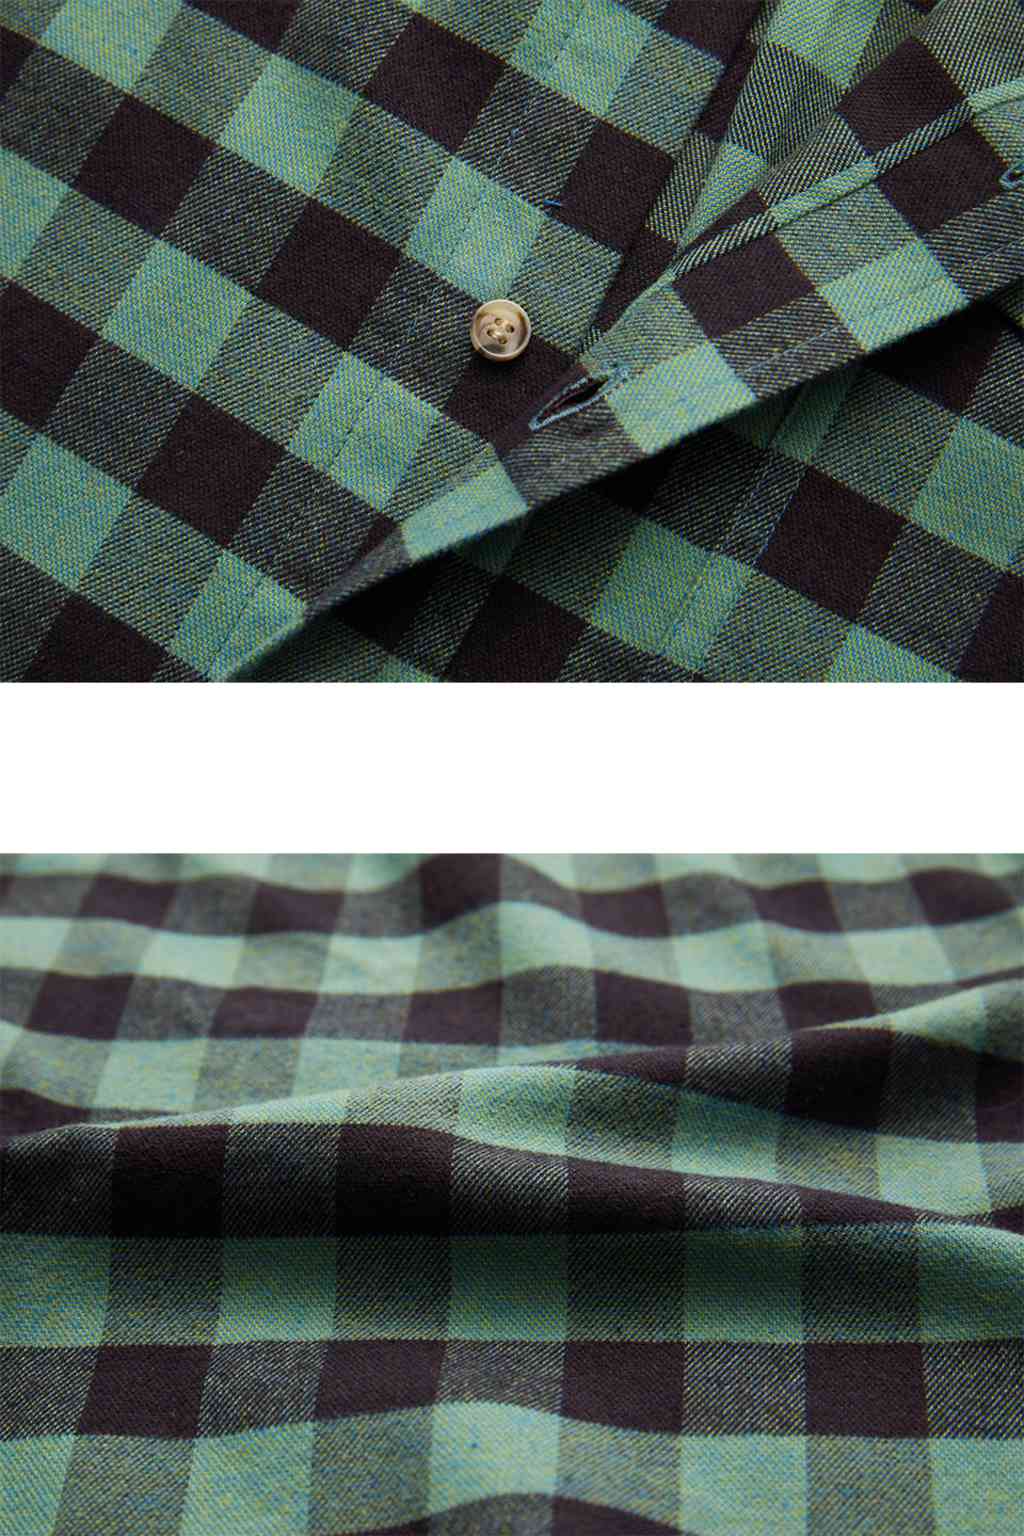 Basic Flannel Check Shirt